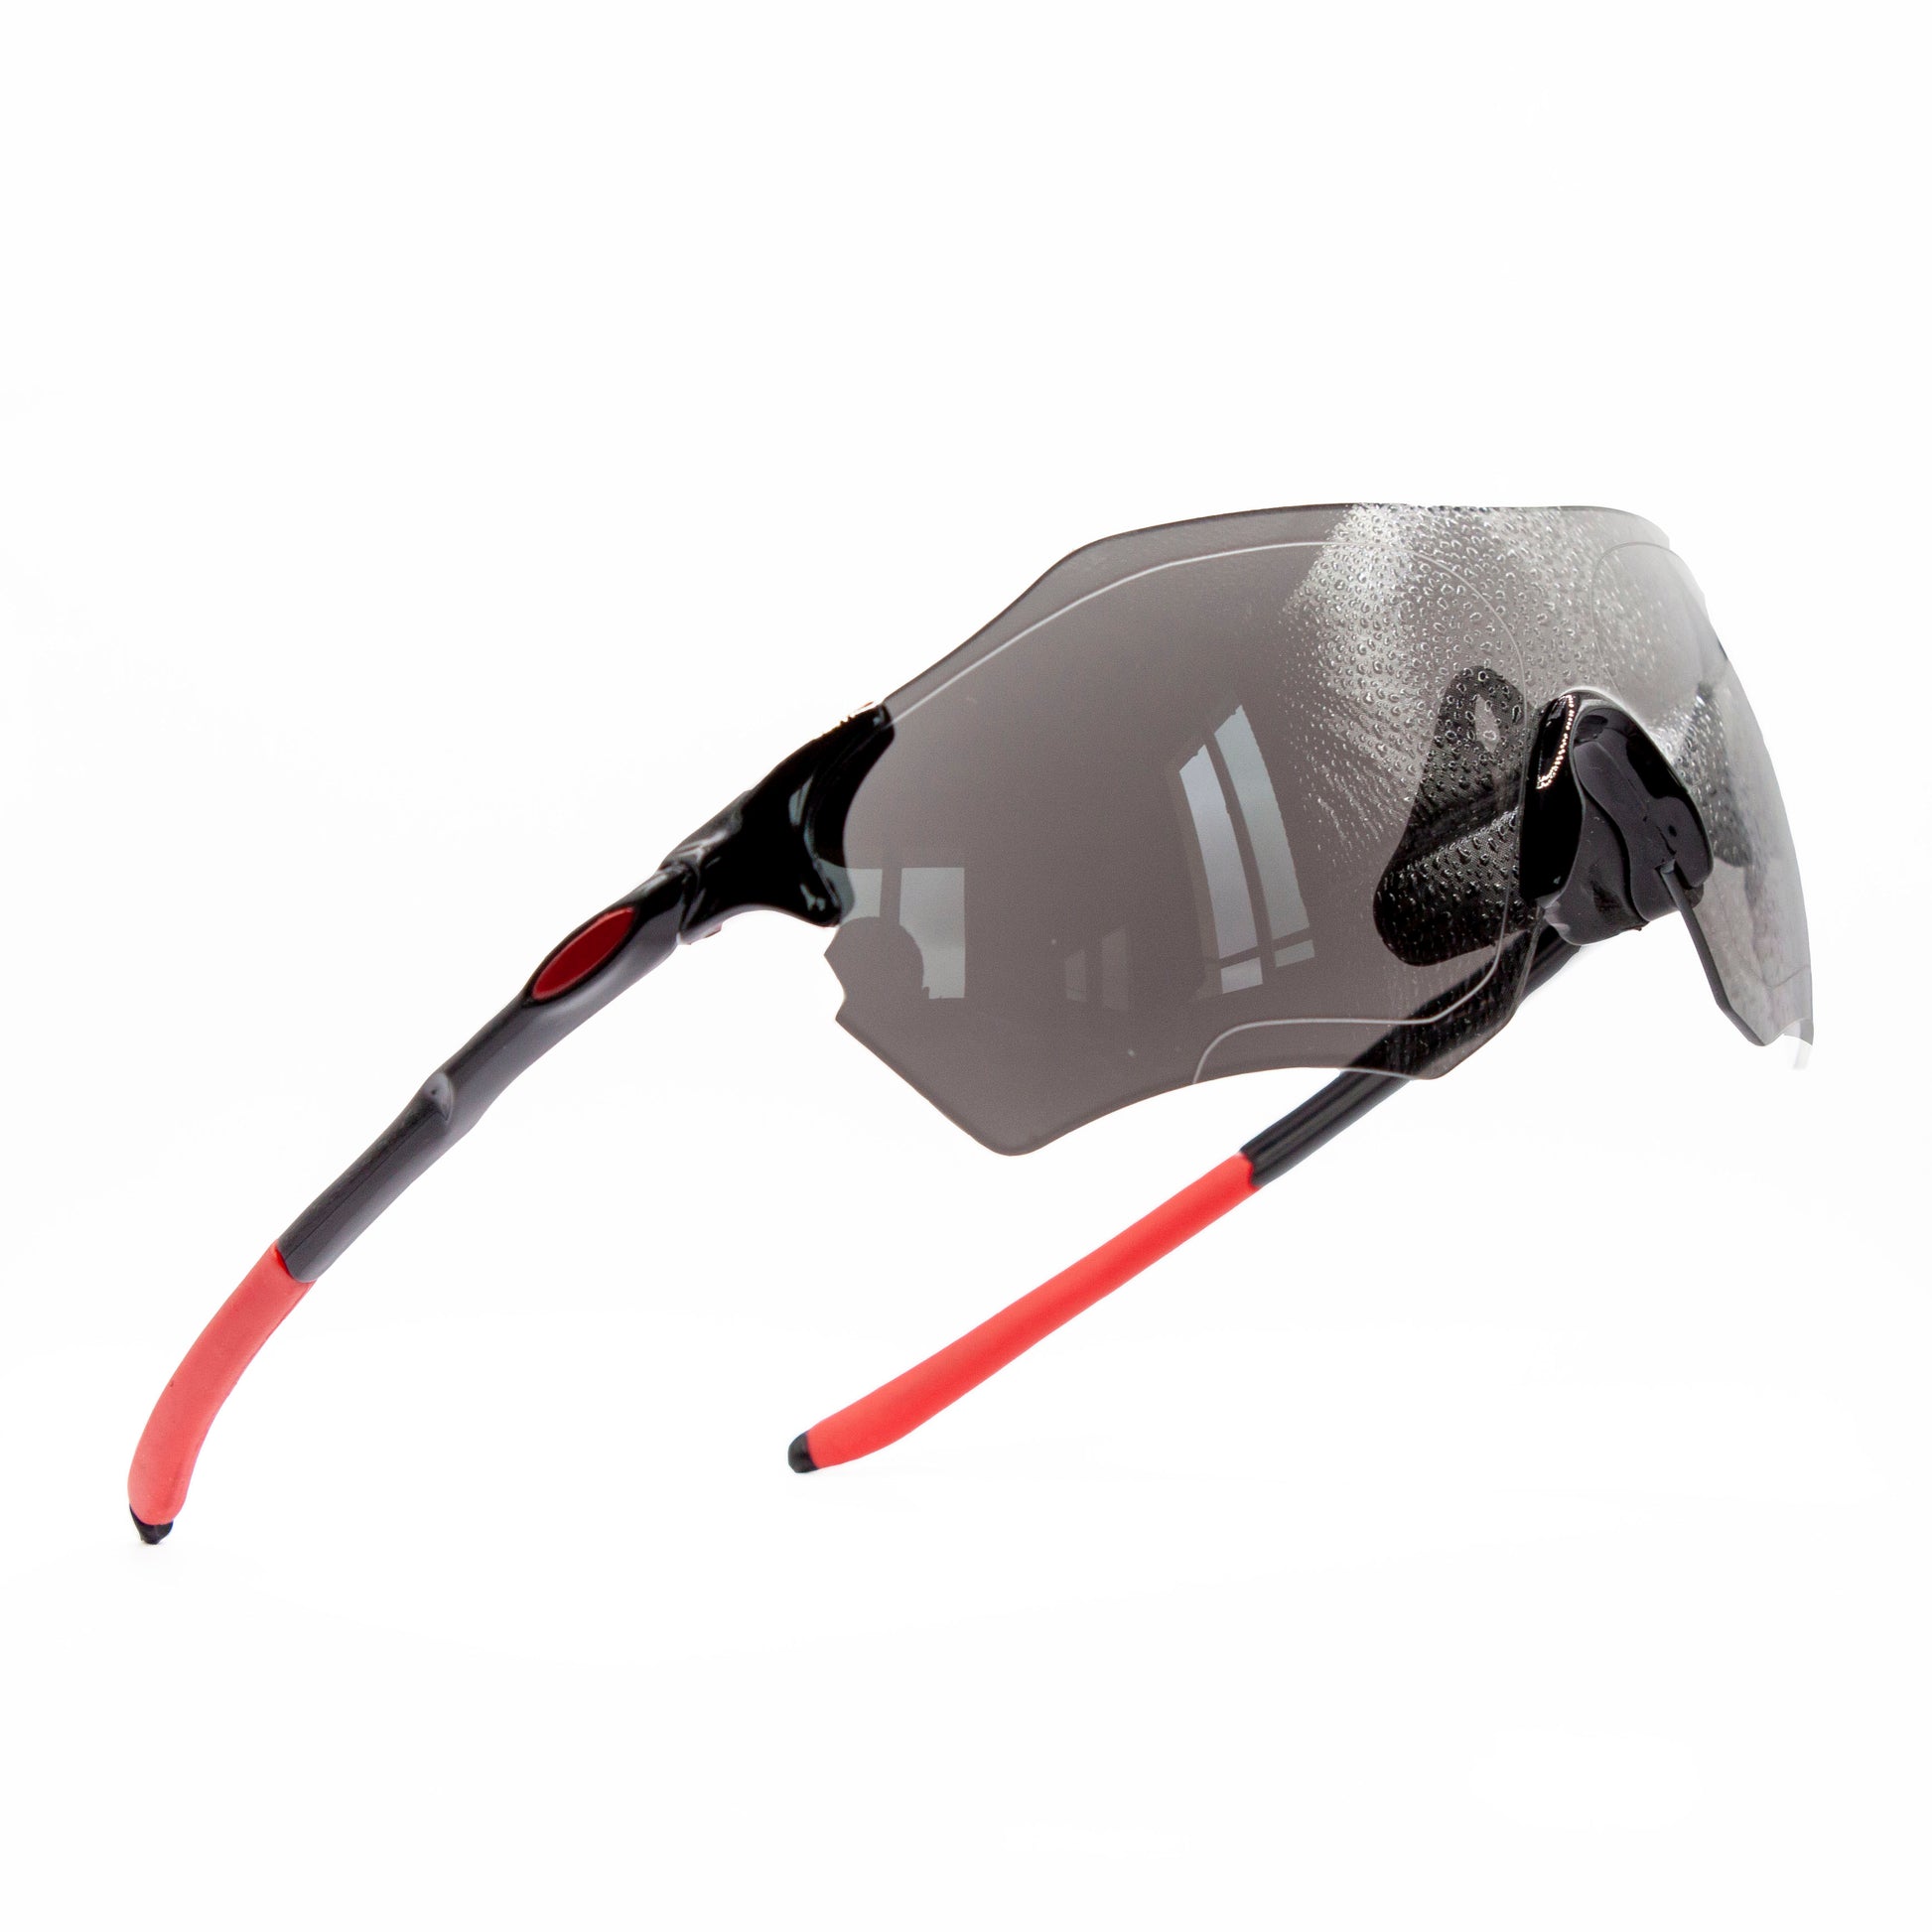 Radikle mountain bike sunglasses - side view